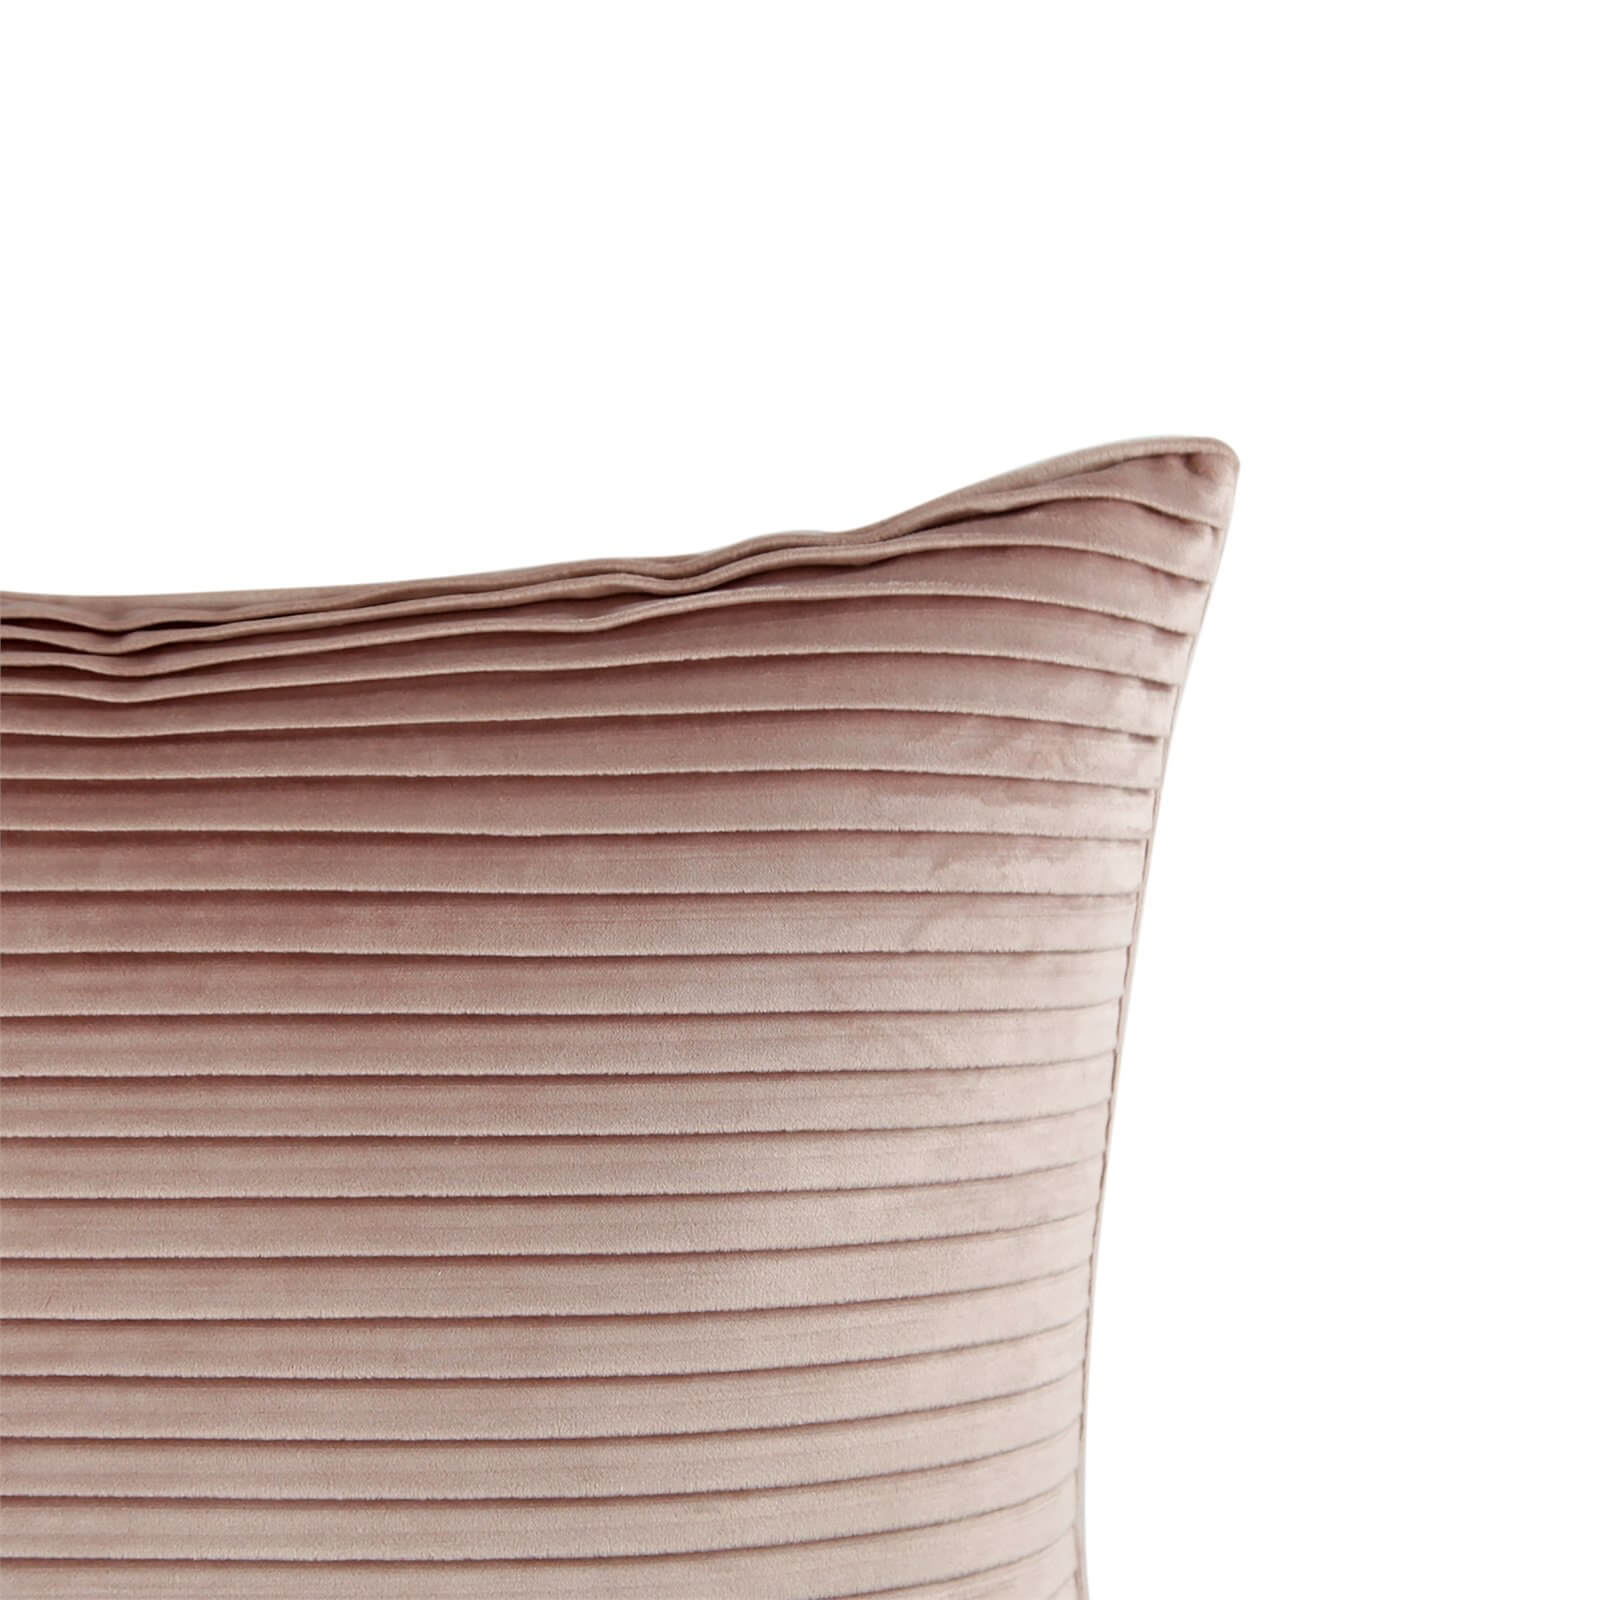 Folded Velvet Cushion - Blush